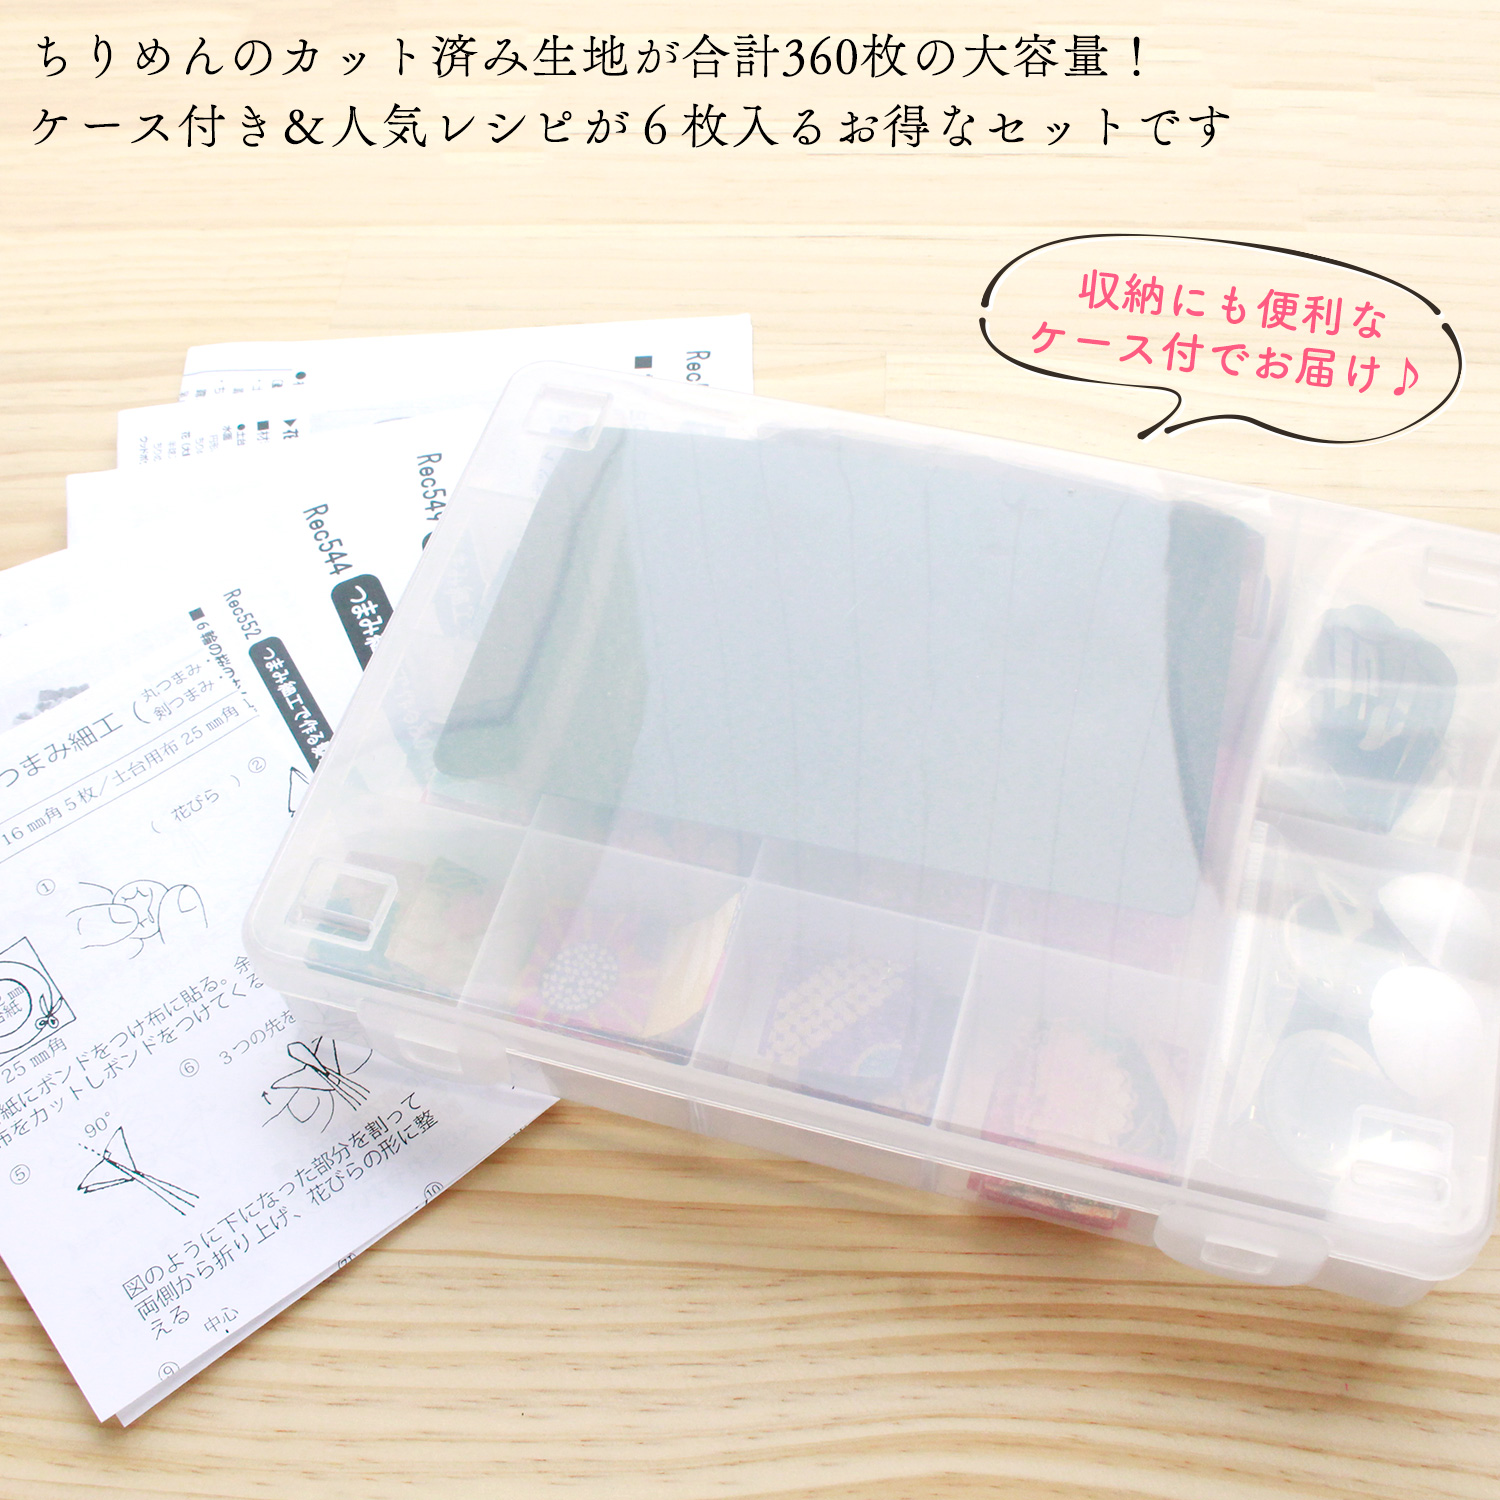 S54-BOX4 つまみ細工材料&道具セット 専用ケース付き (袋)「手芸材料の